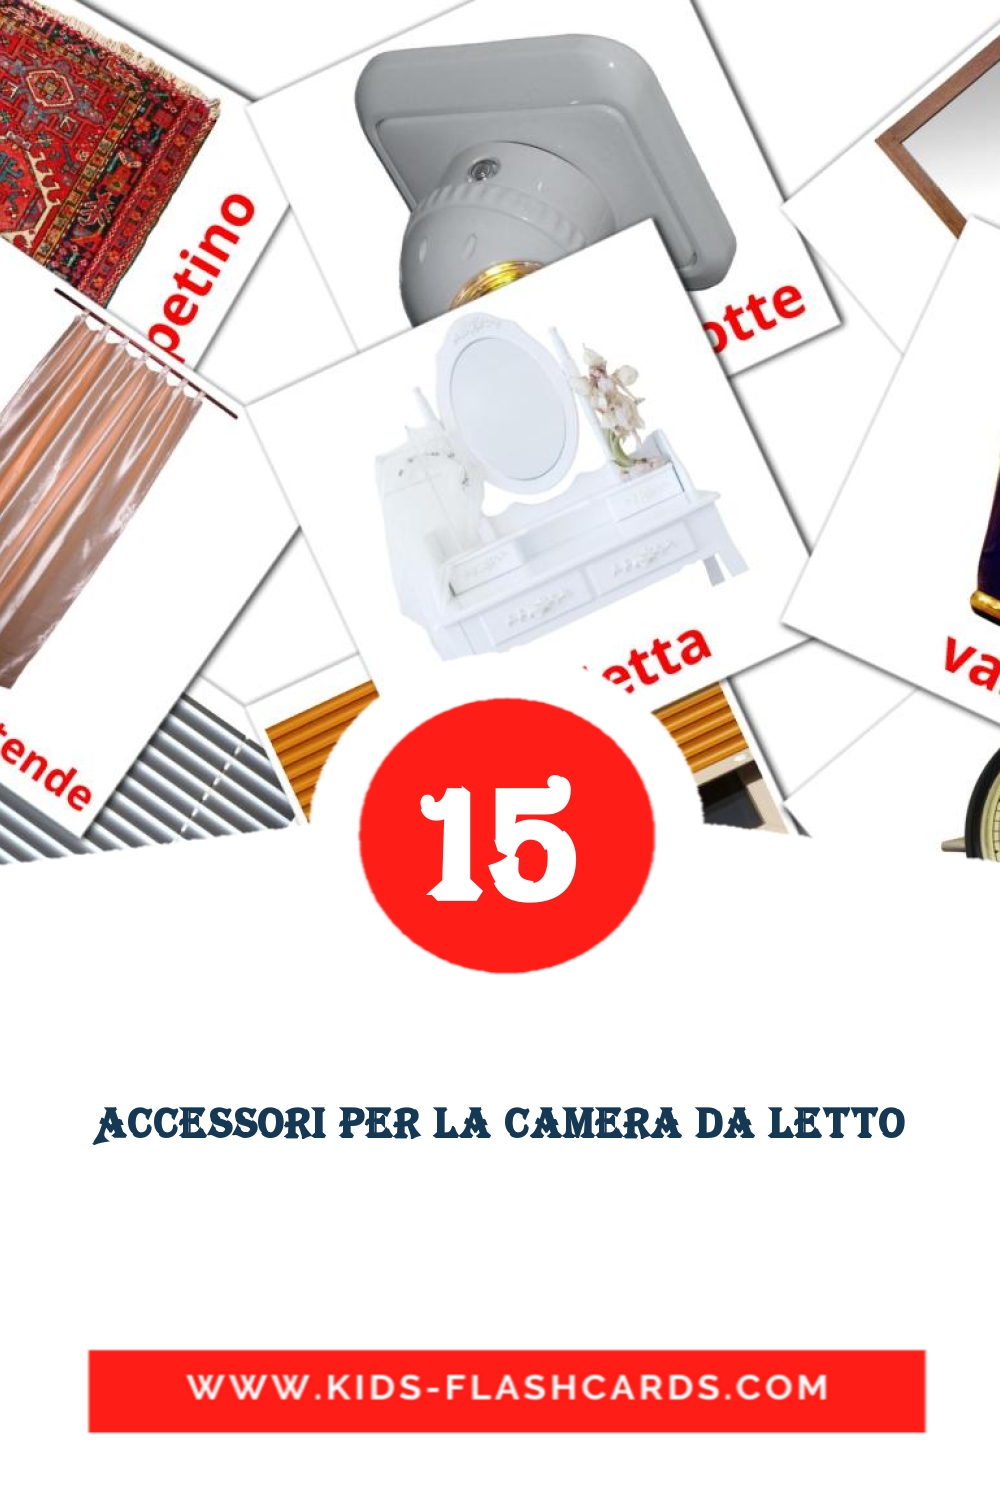 18 cartes illustrées de Accessori per la camera da letto pour la maternelle en italien